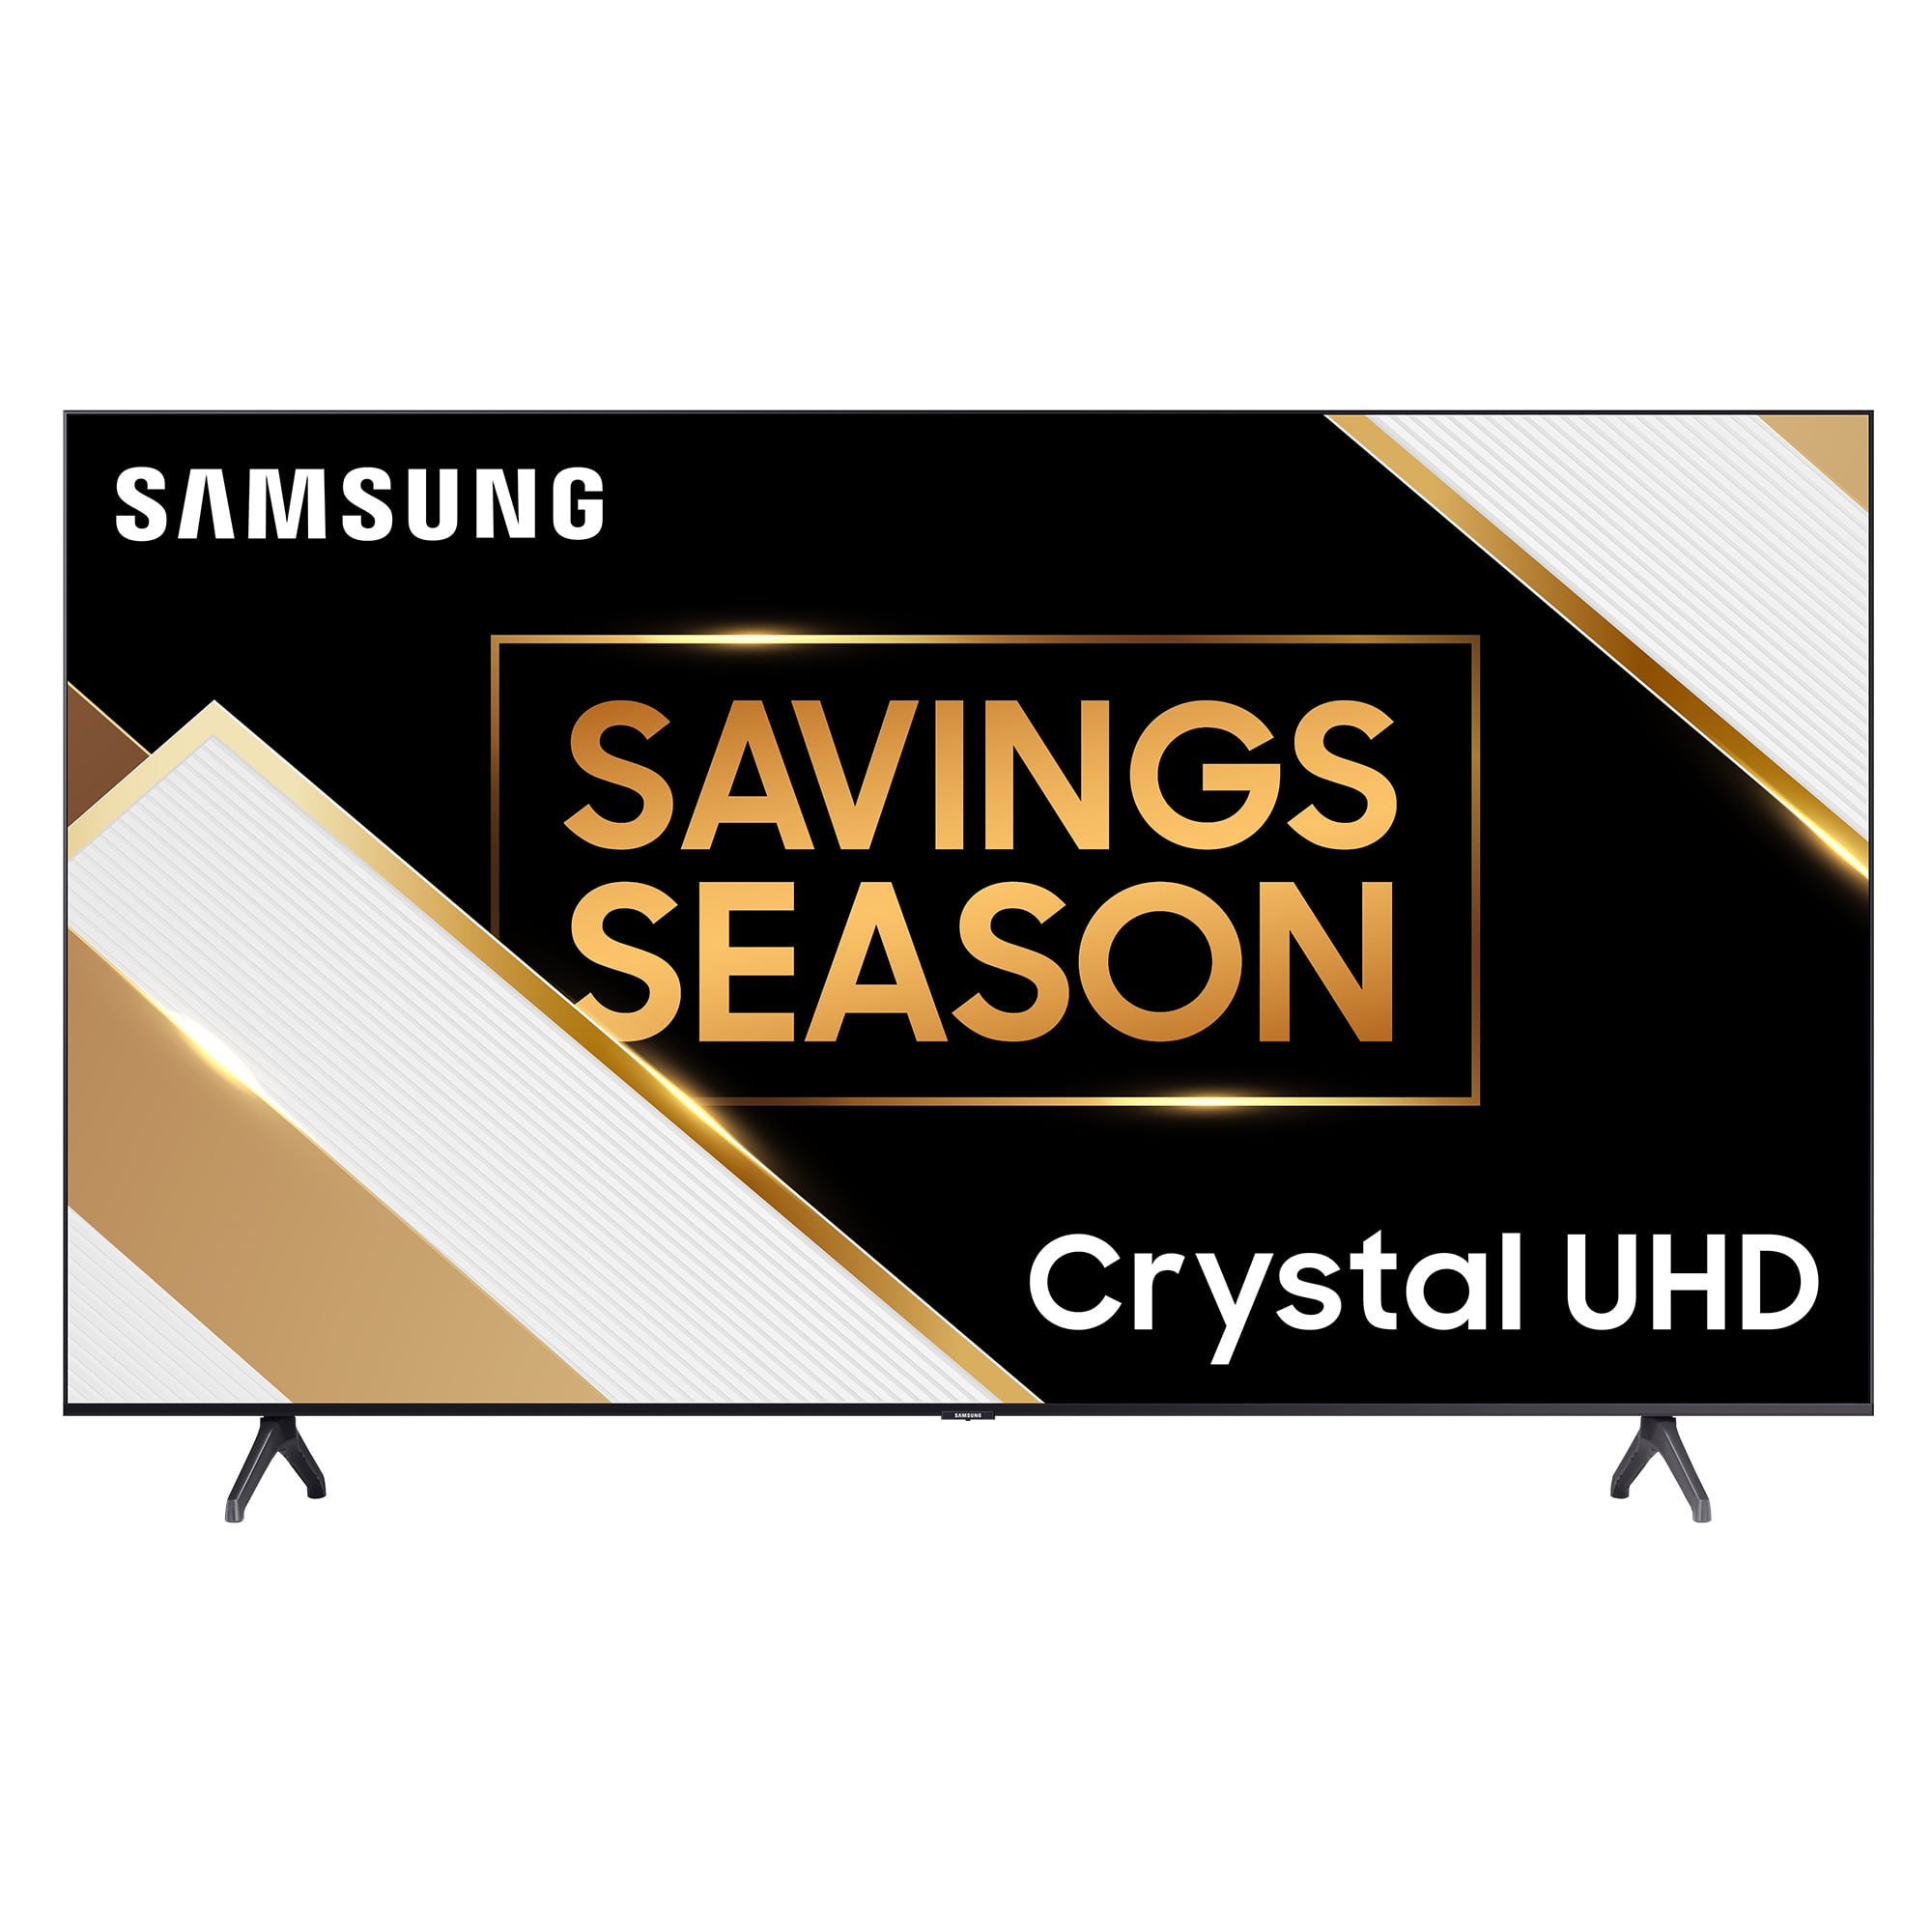 SAMSUNG 60 Class 4K Crystal UHD (2160p) LED Smart TV with HDR UN60TU7000 